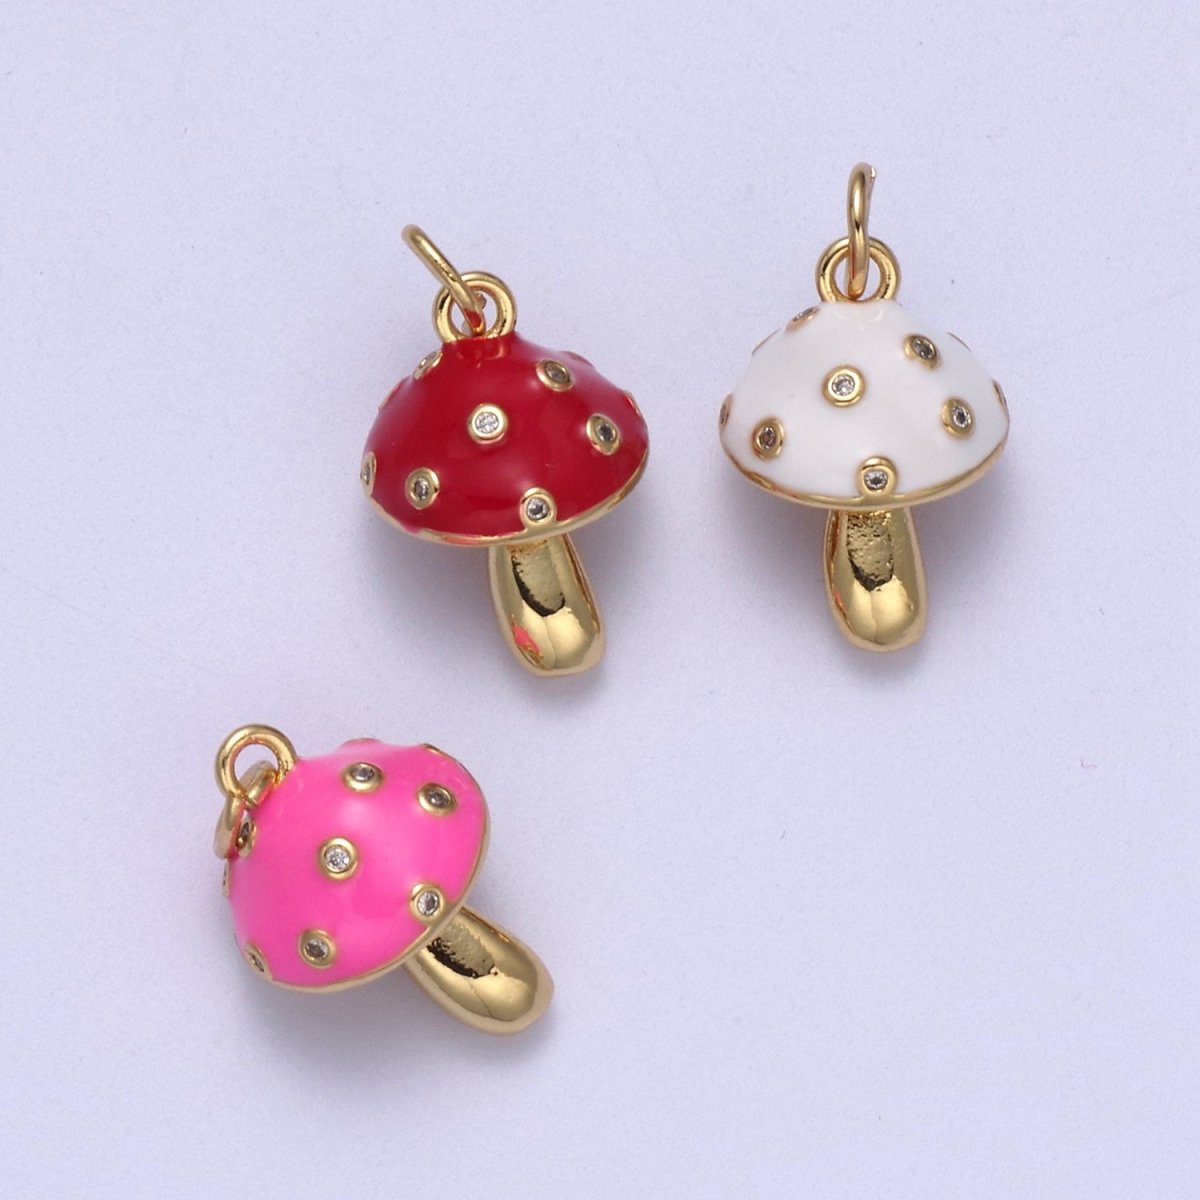 Dainty Magic Mushroom Charms -Shroomie Pendants Bracelet Necklace -Kawaii Pink Red White color N-341 - N-343 - DLUXCA